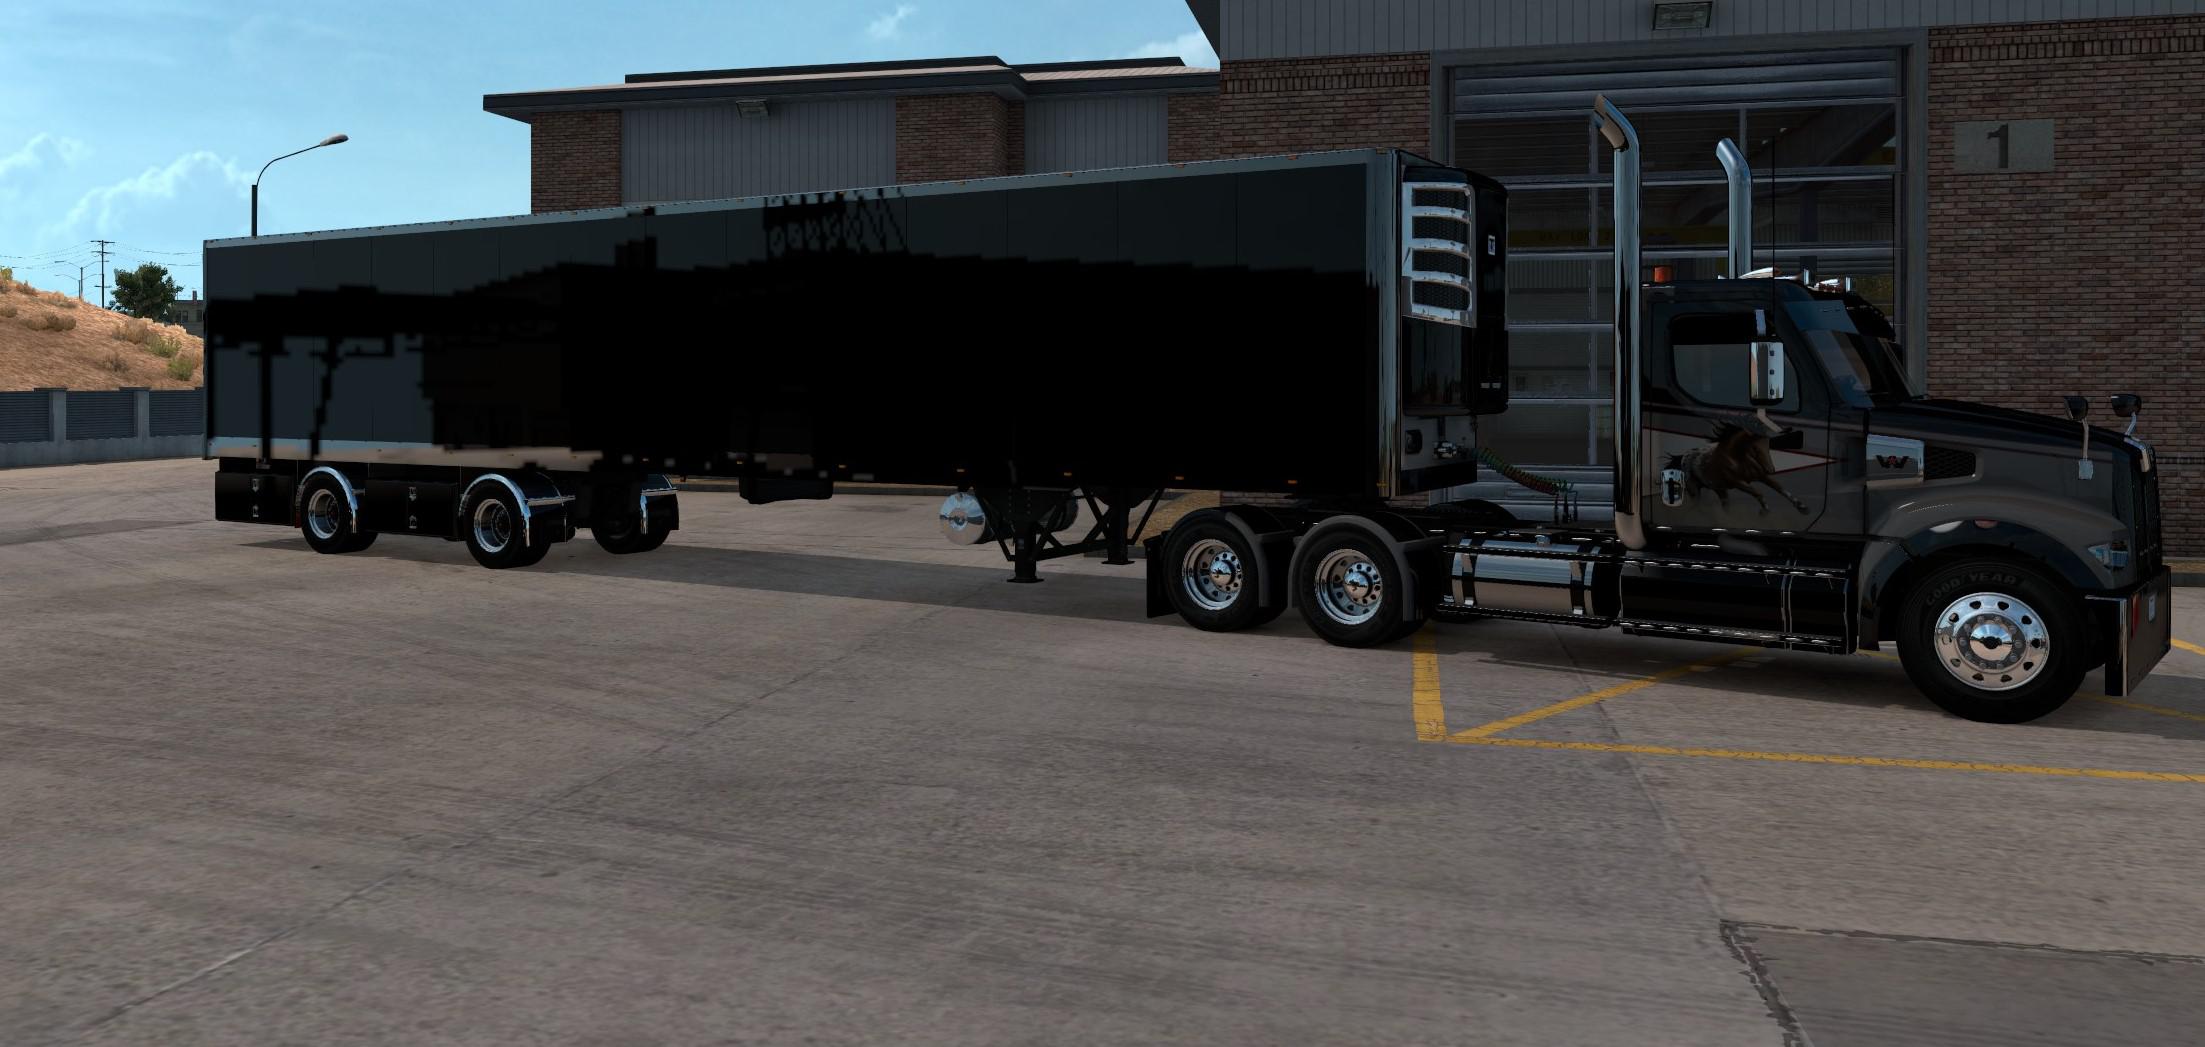 Ats Custom 53ft Trailer Ownable 139x American Truck Simulator Modsclub